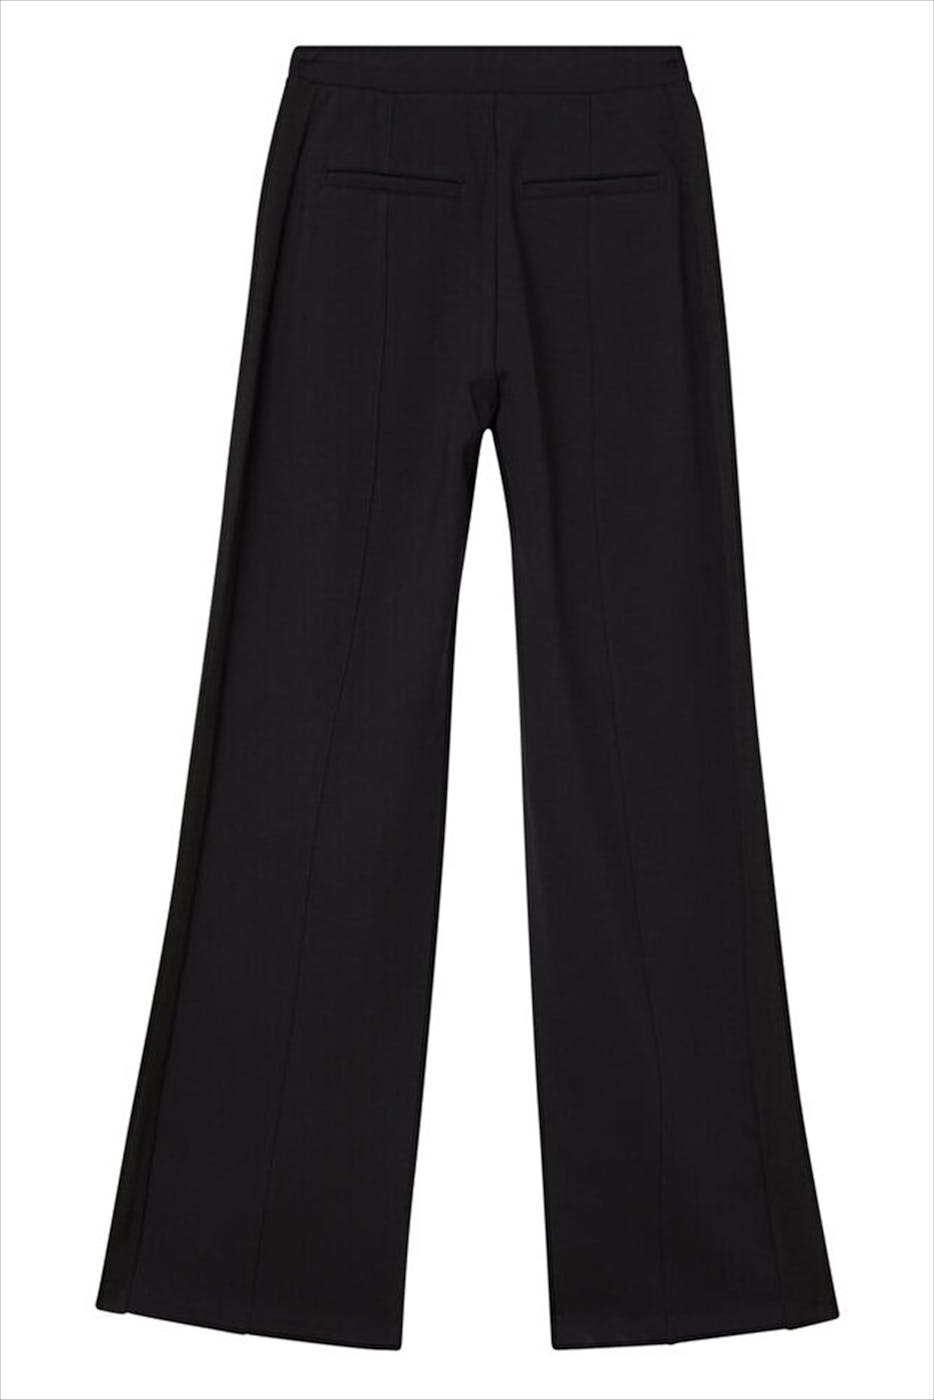 Calvin Klein Jeans - Zwarte CK Jersey Broek